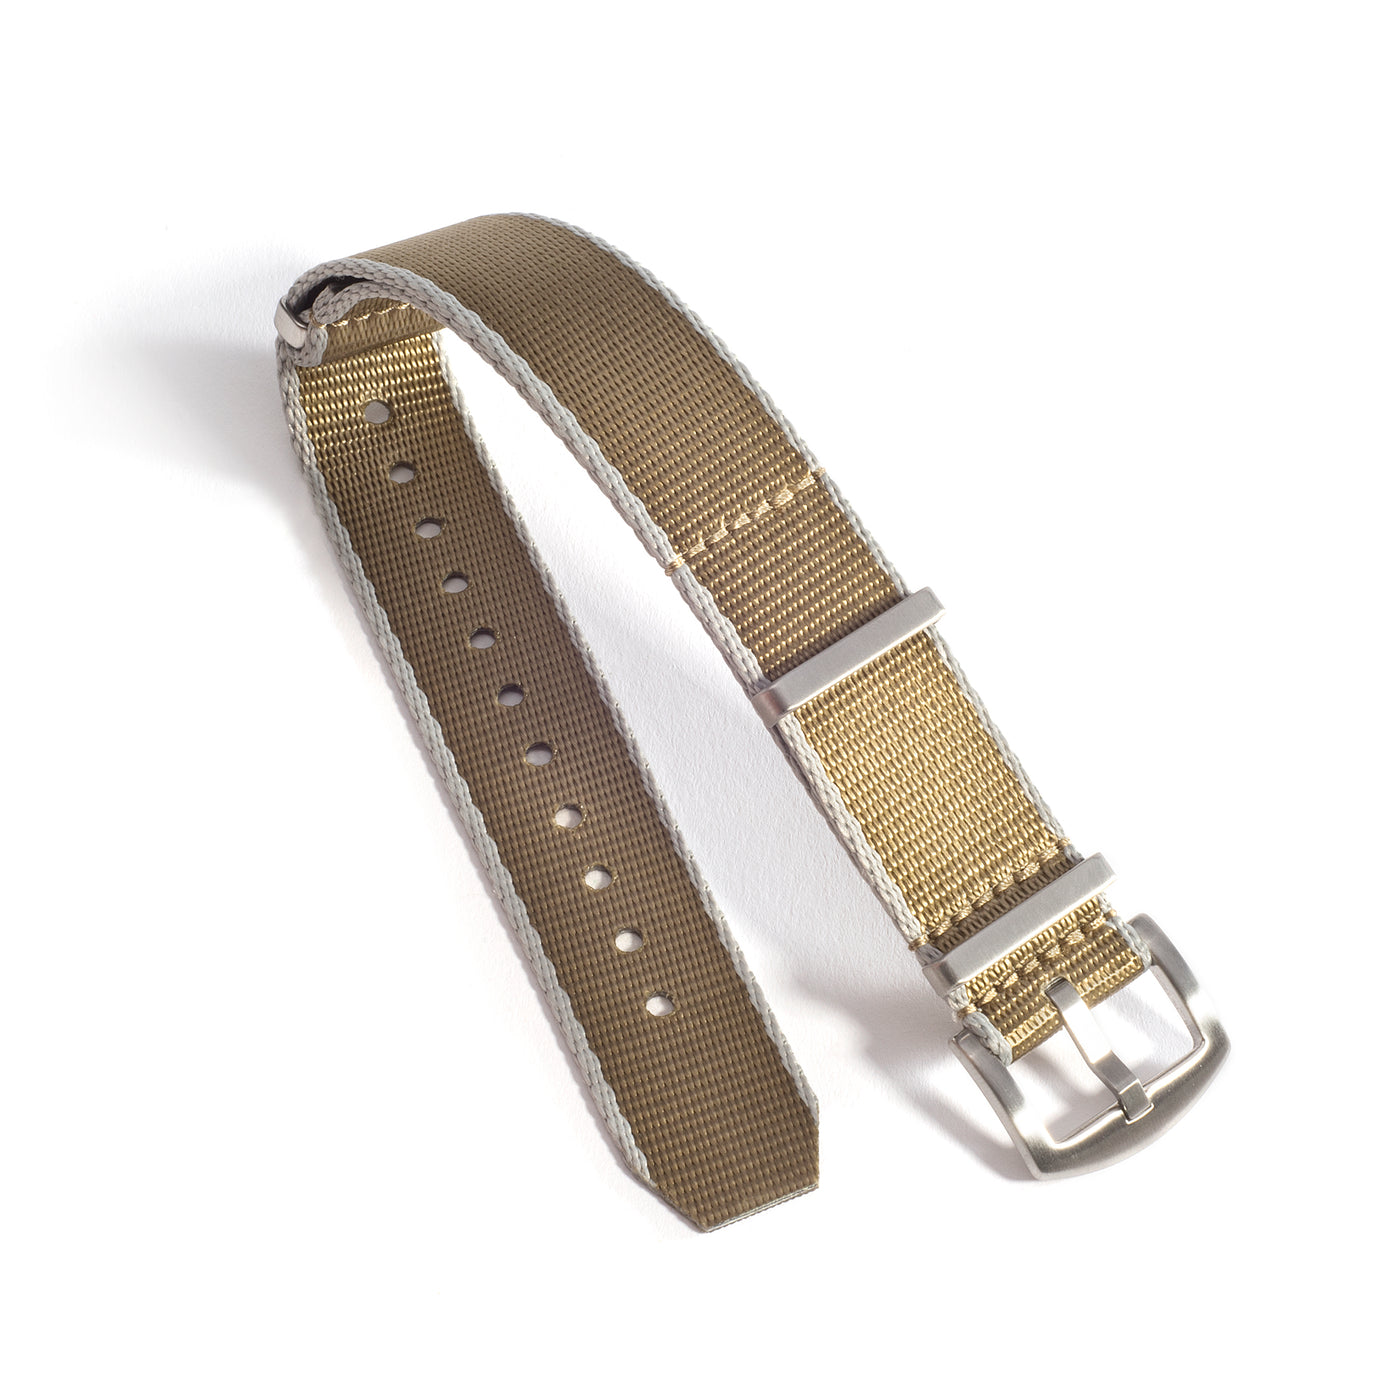 Everest Khaki & Grey NATO-Style Nylon Watch Band